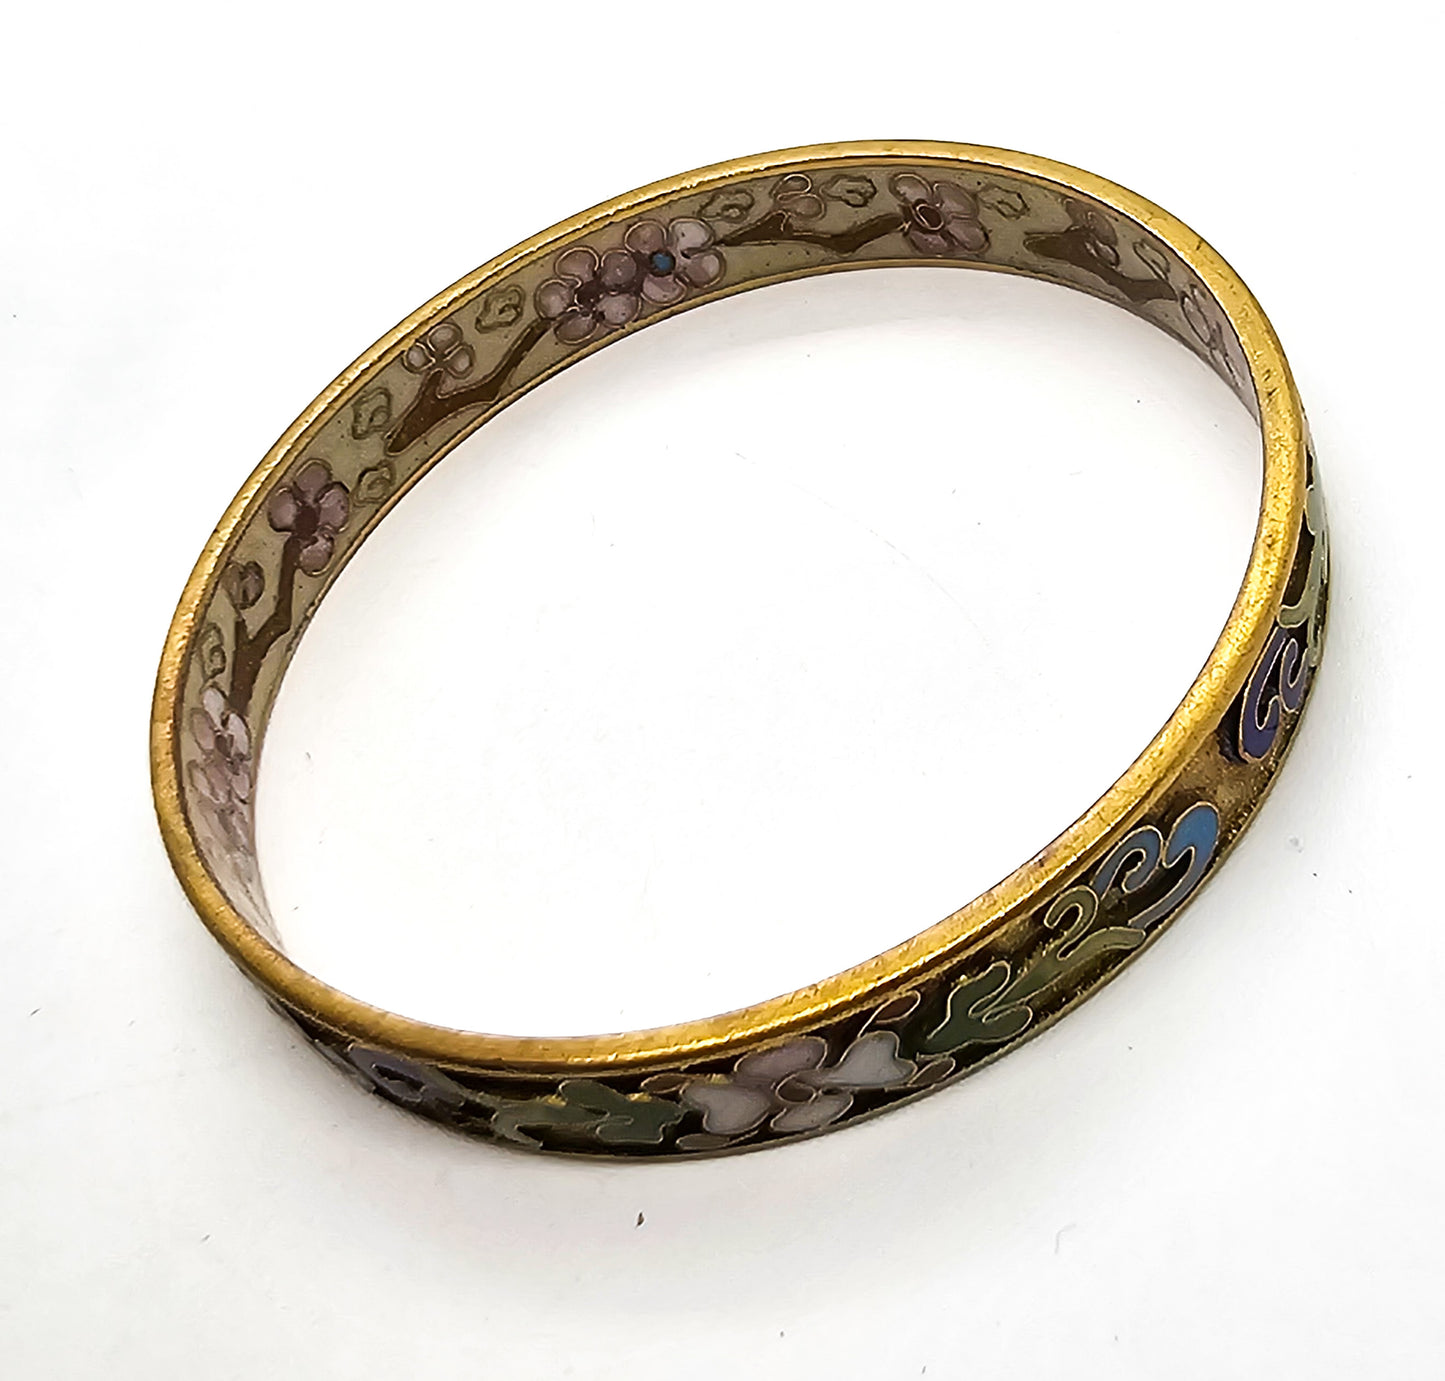 Chinese Cloisonne enamel painted textured lotus flower bangle bracelet